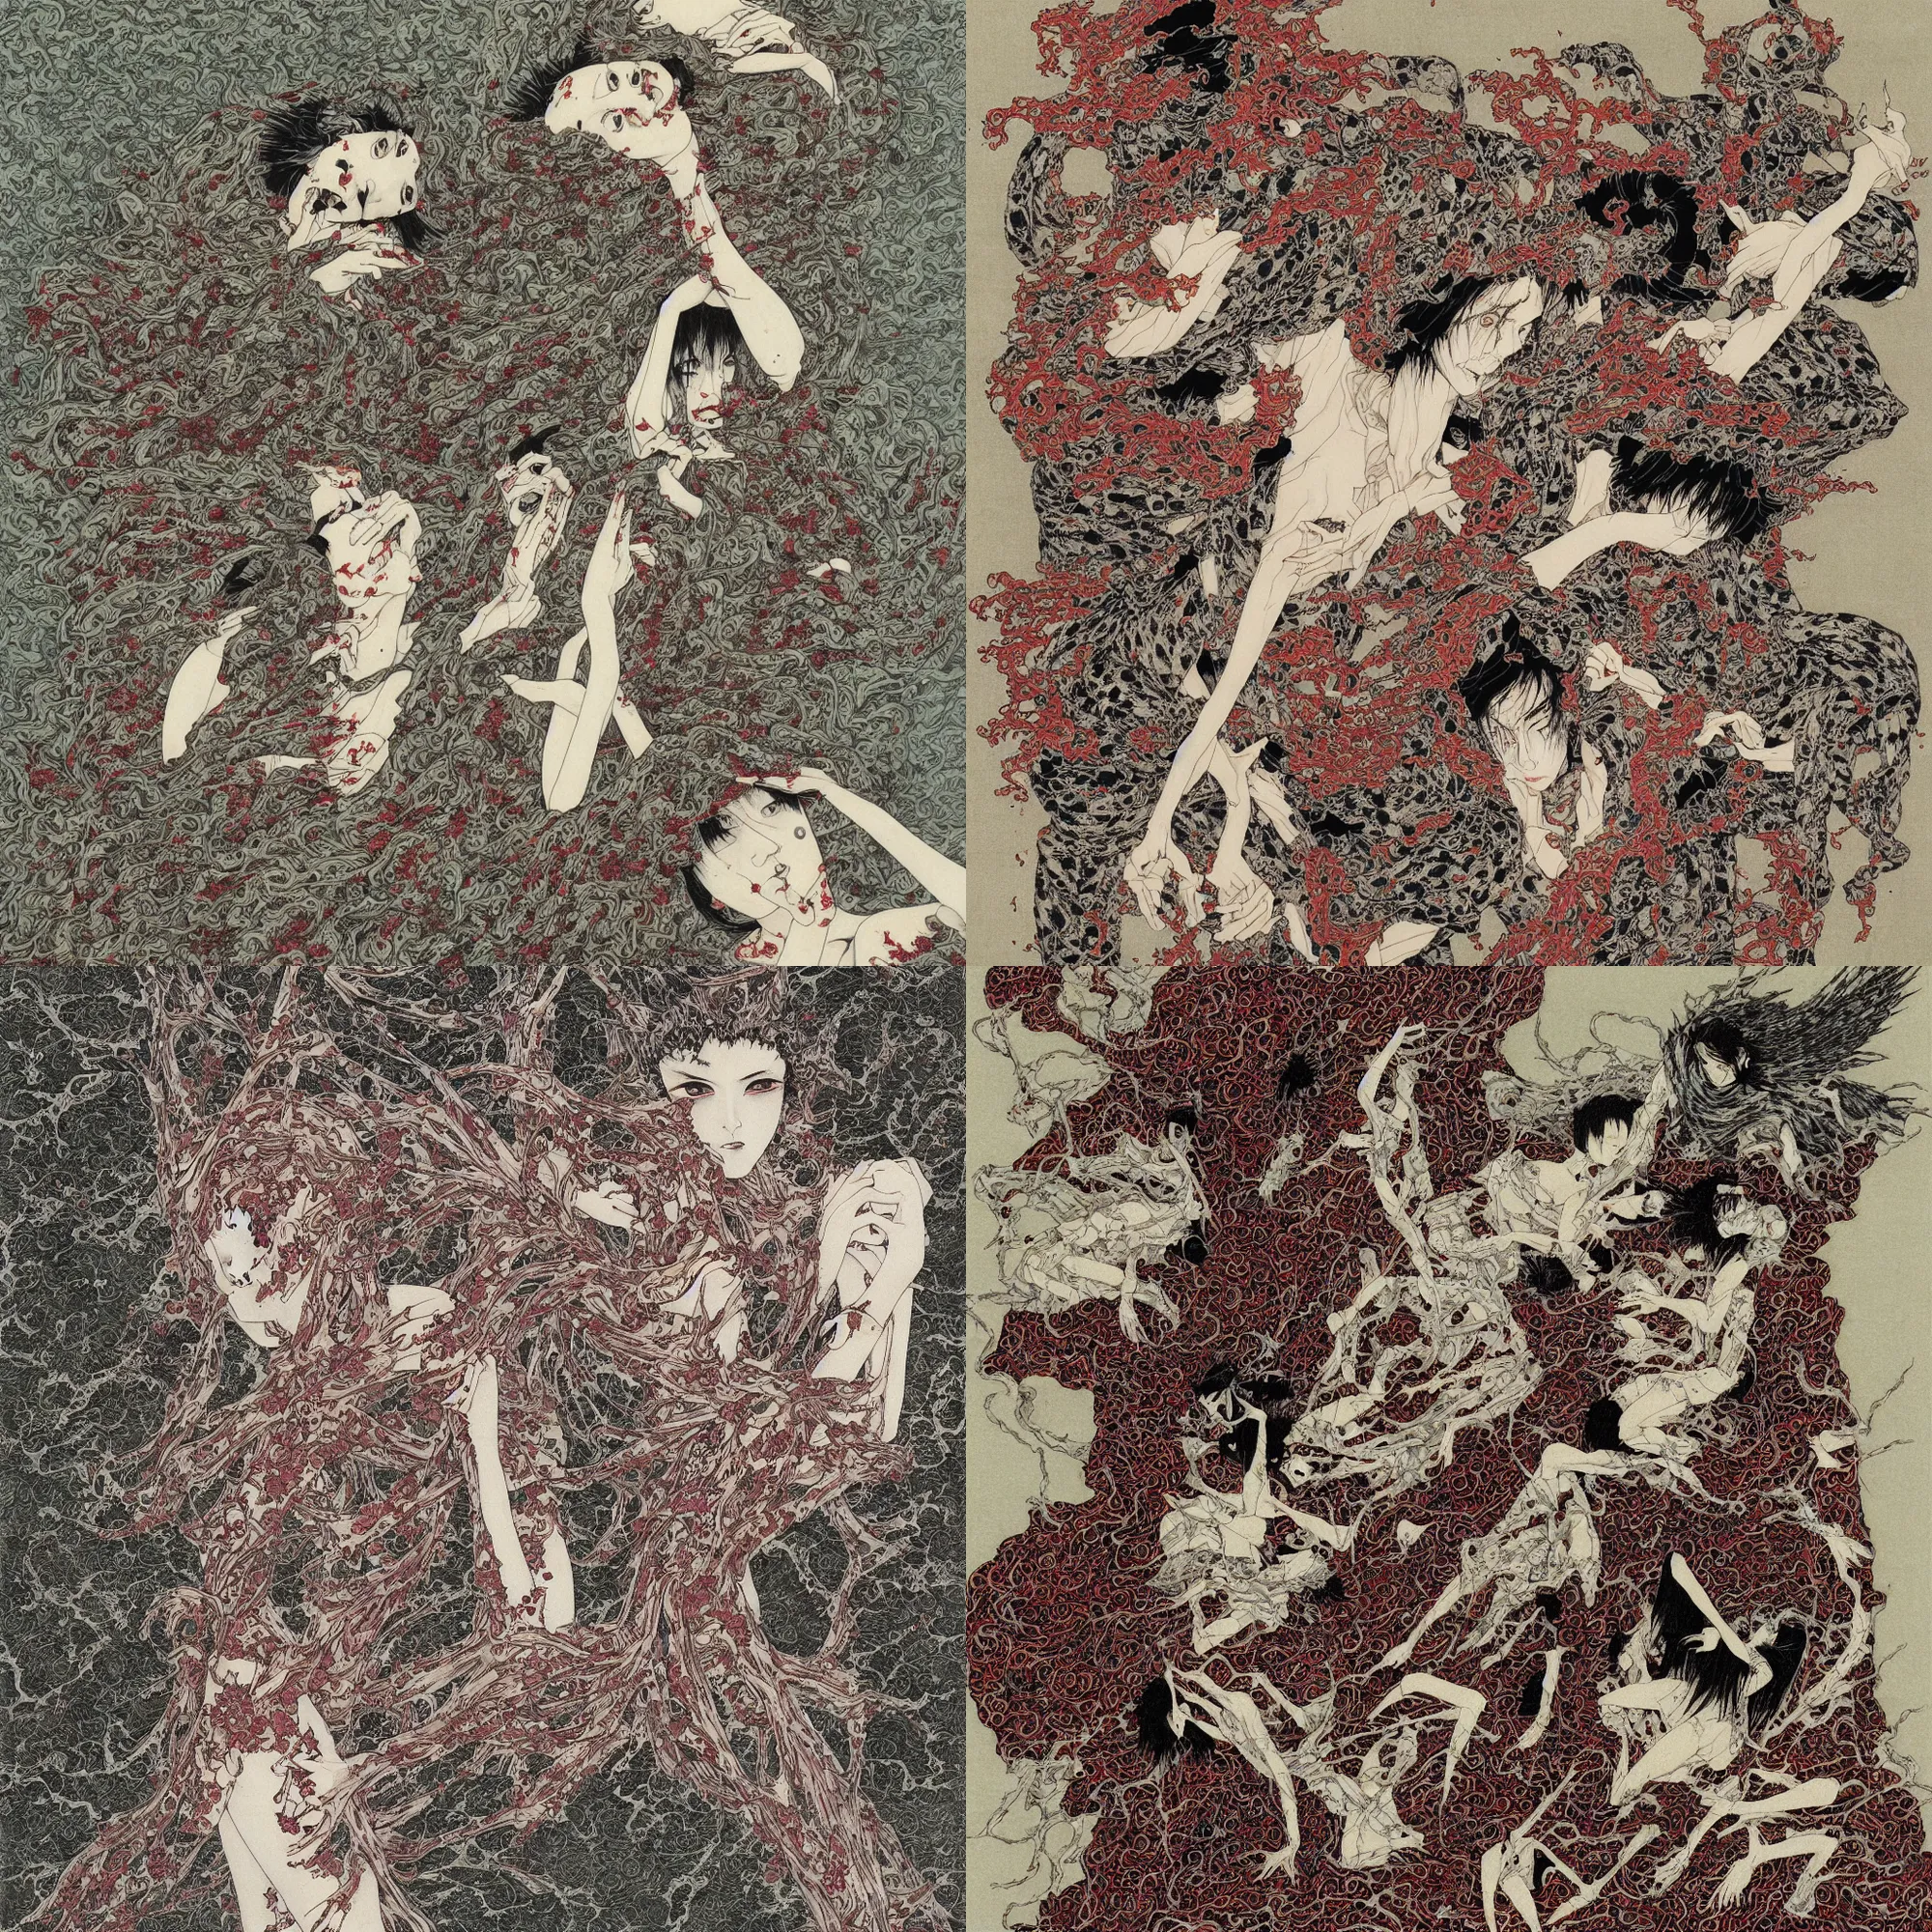 Prompt: seraph of glitches by Junji Ito and Takato Yamamoto, oil on canvas